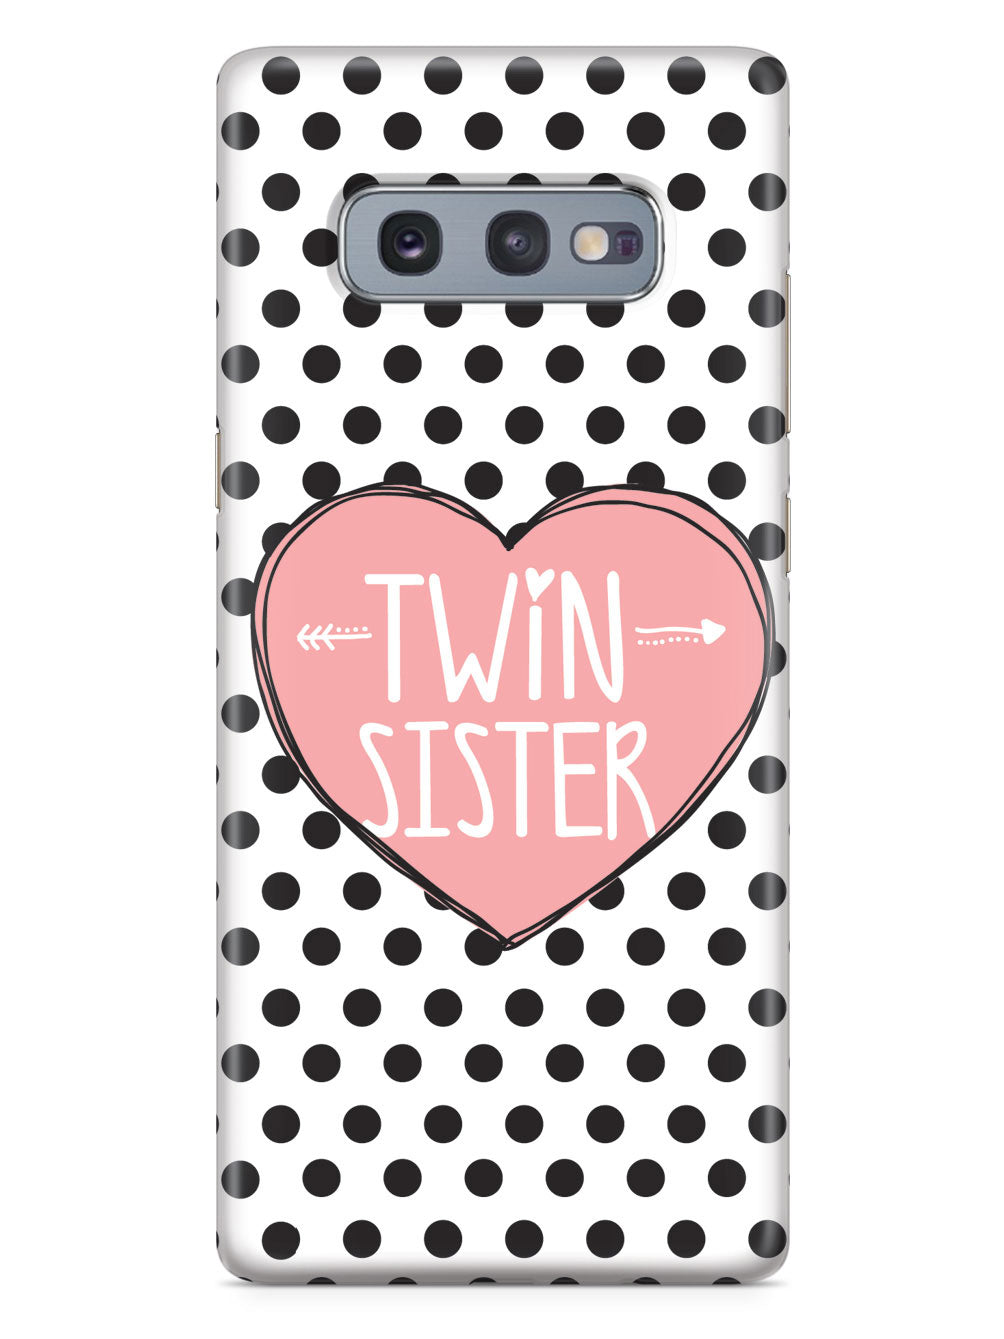 Sisterly Love - Twin Sister - Polka Dots Case